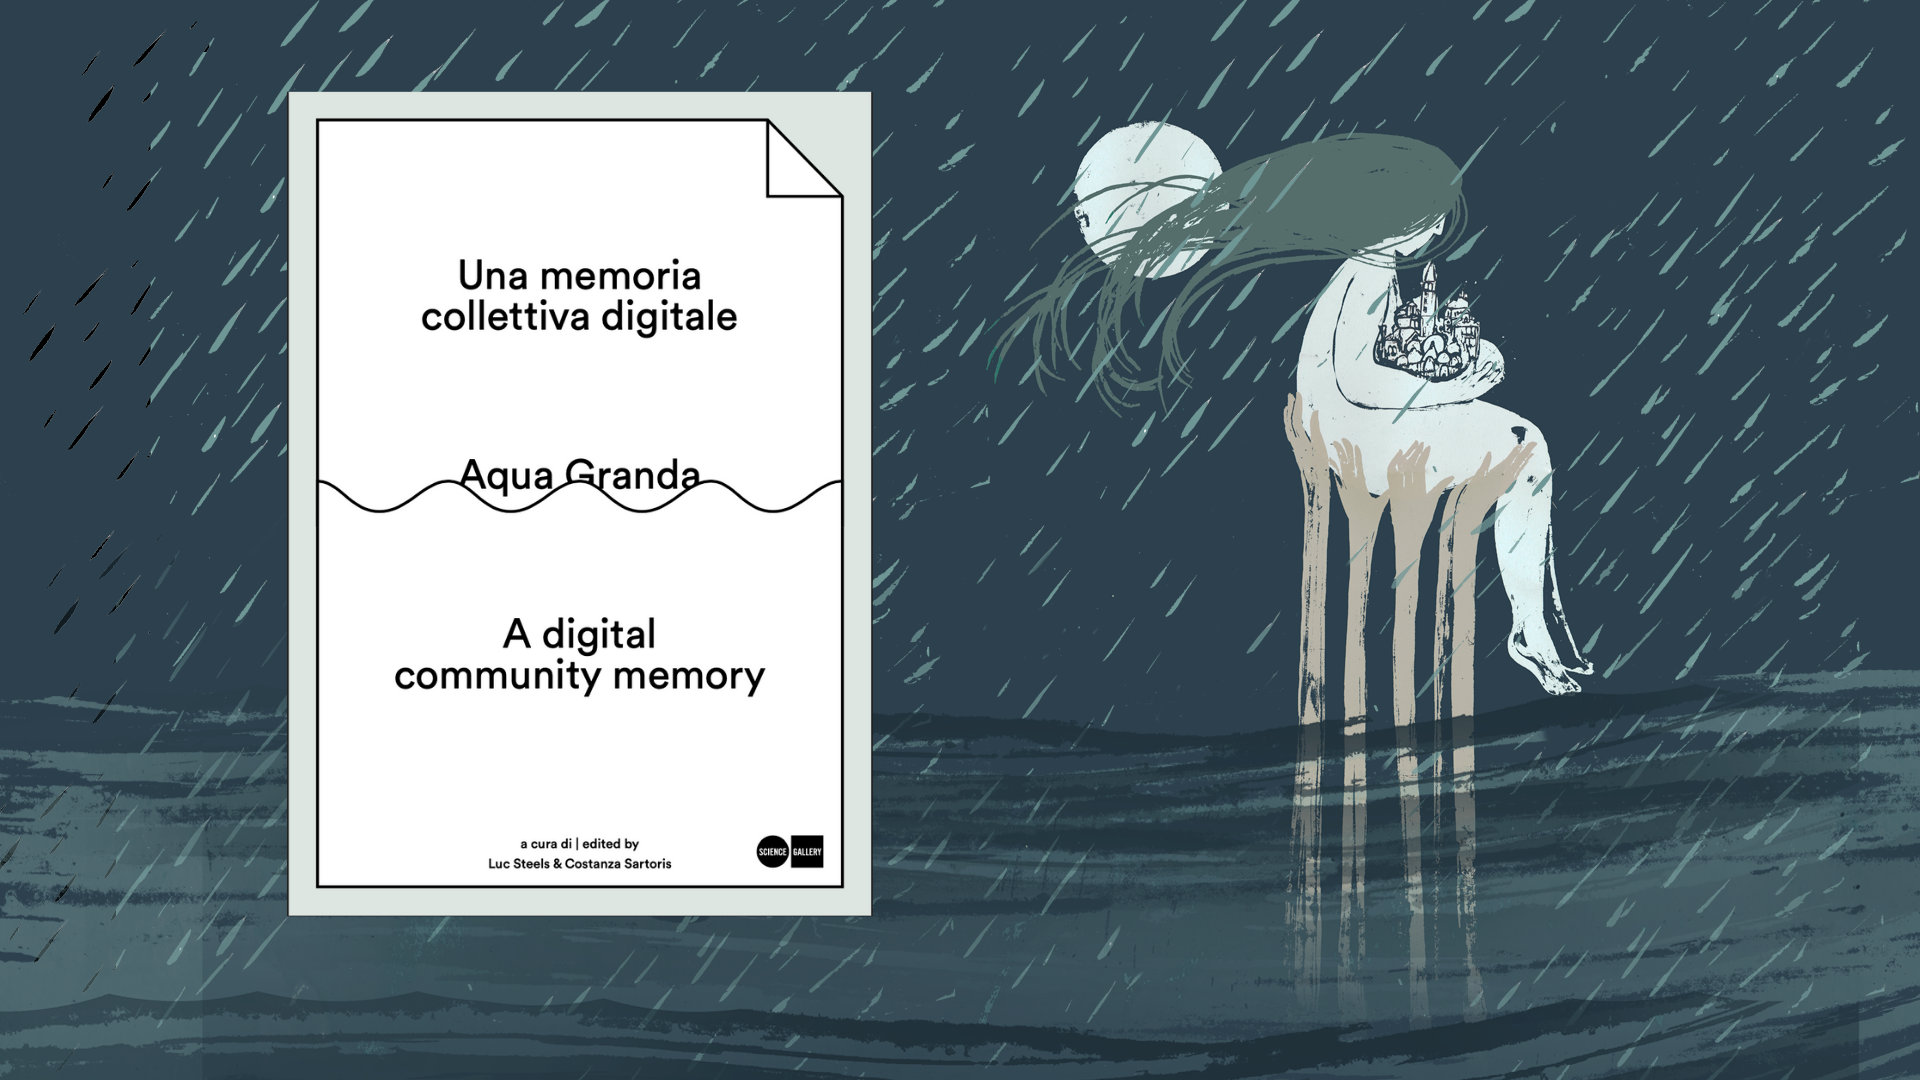  Aqua Granda A digital community memory - Catalog!